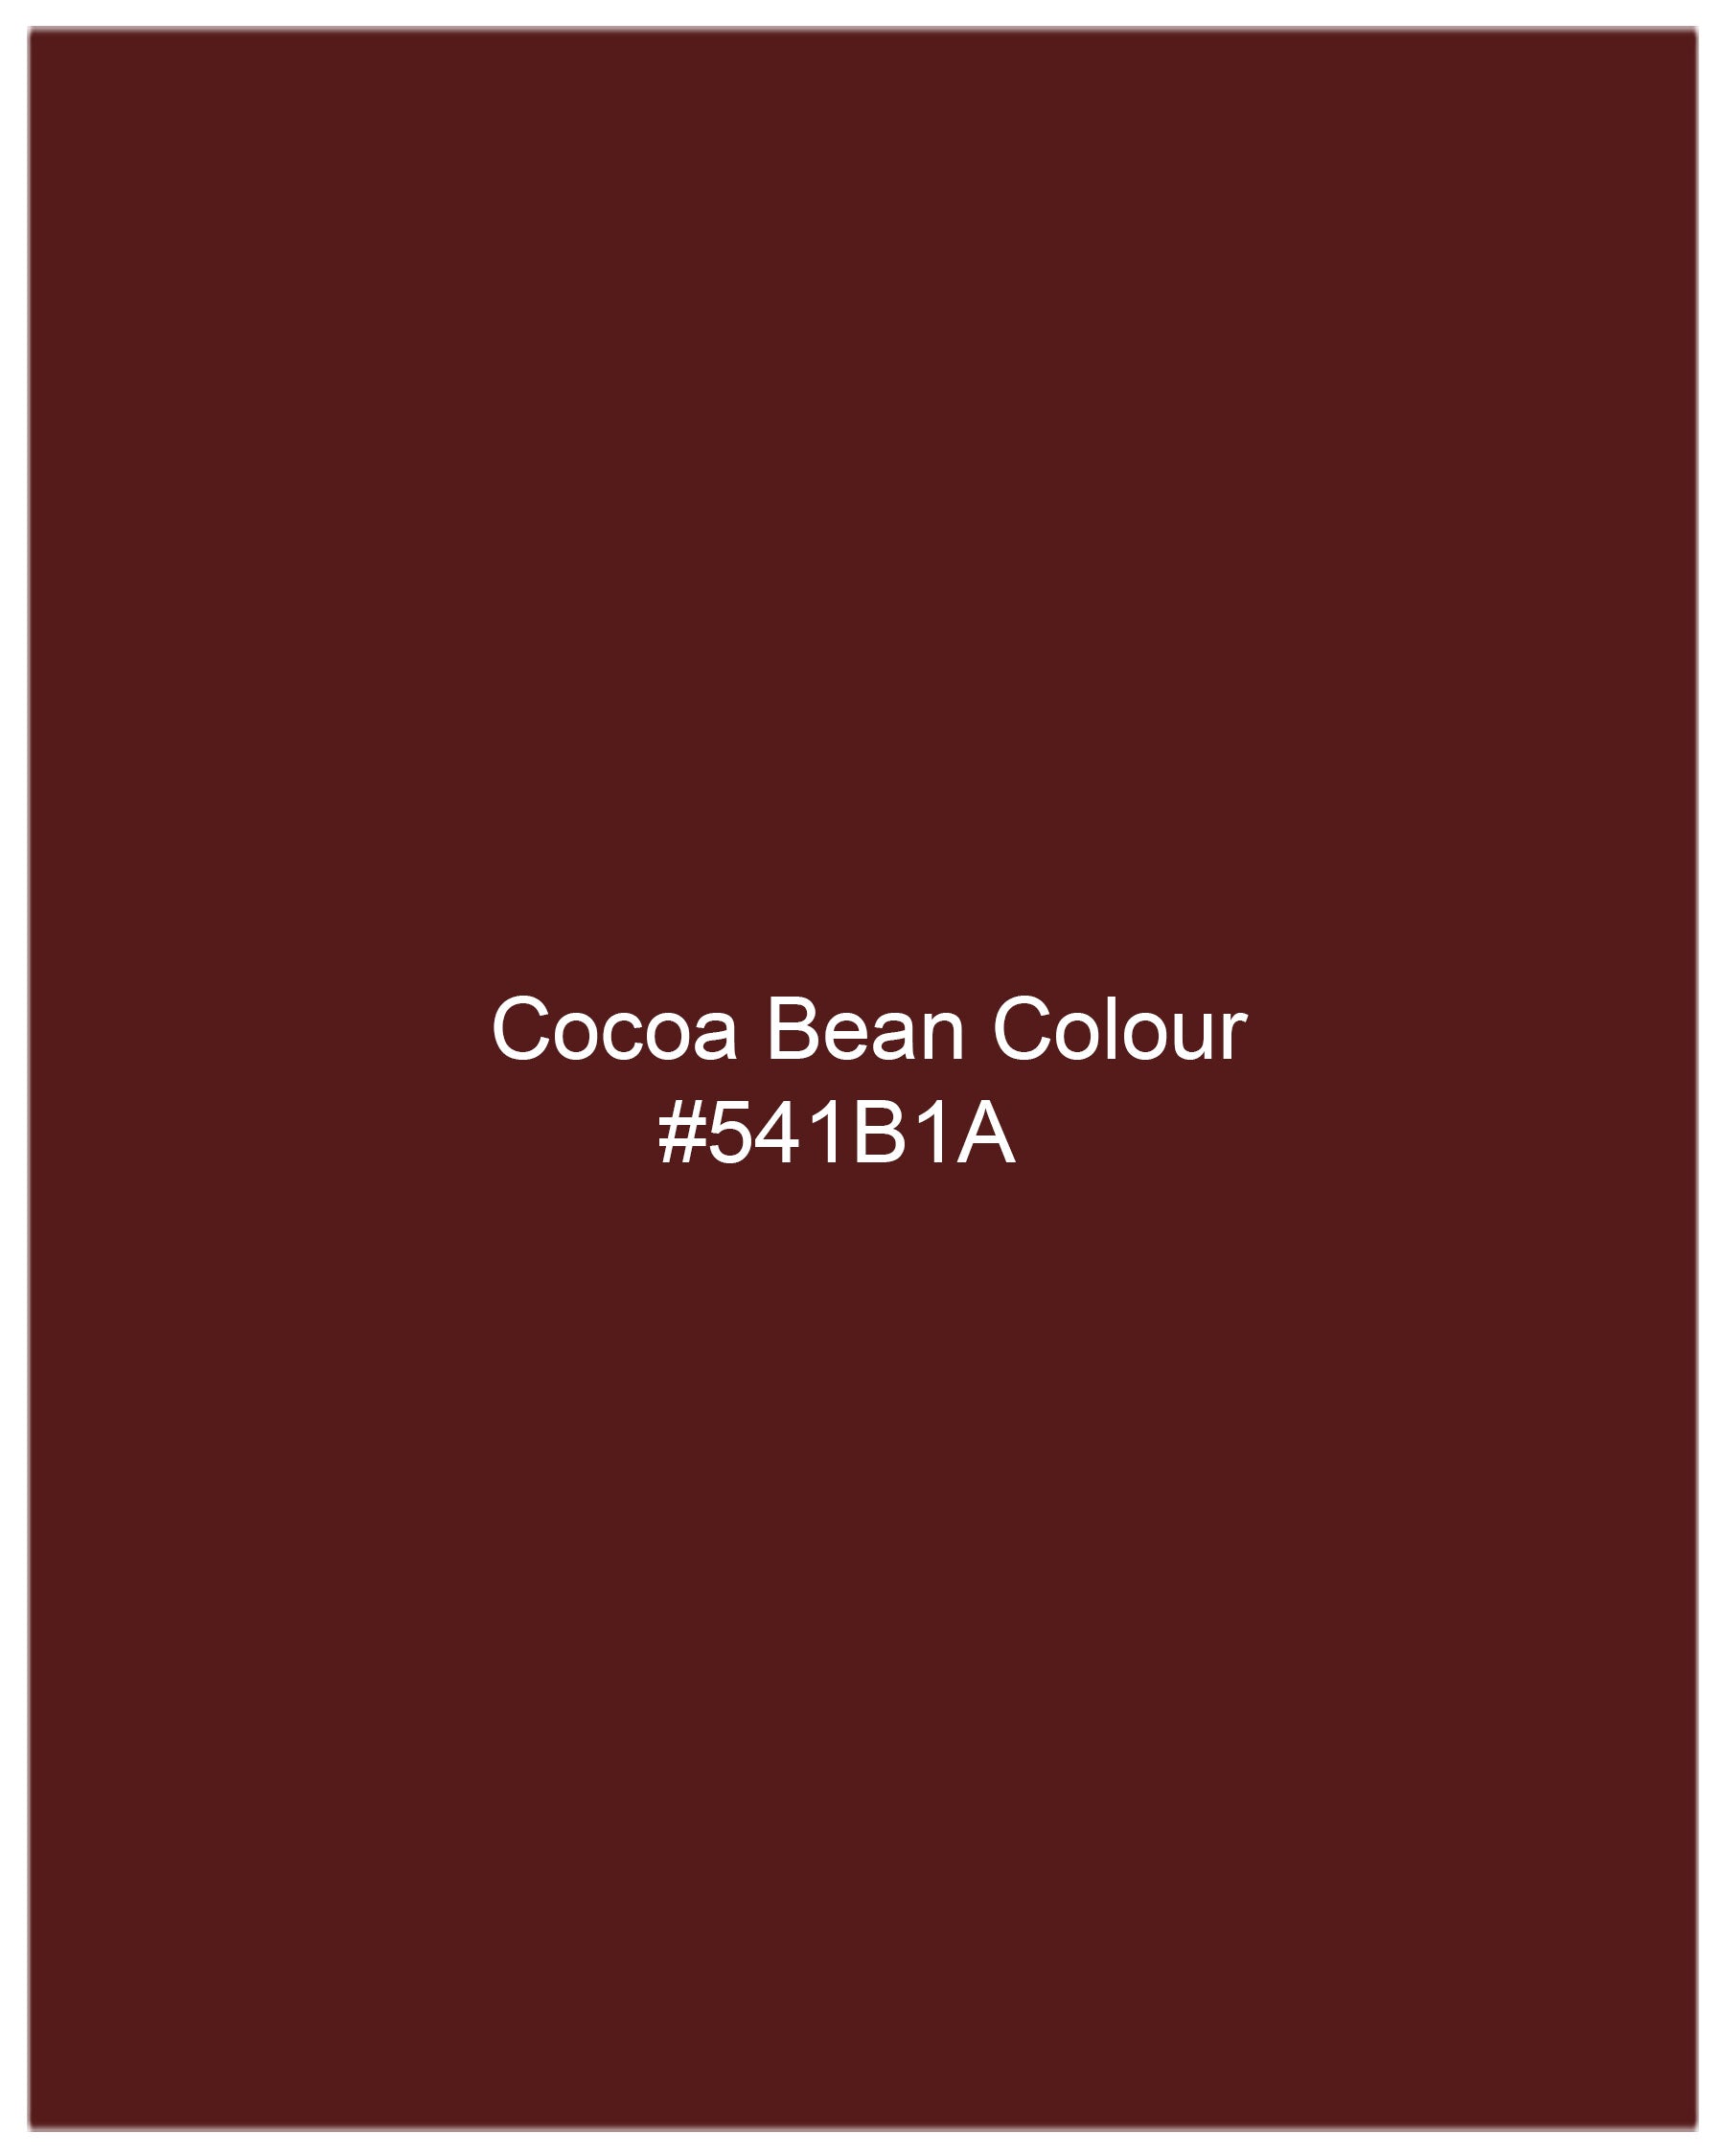 Cocoa Bean Brown Chambray Textured Premium Cotton Shirt 7730-BD-BLK-38,7730-BD-BLK-38,7730-BD-BLK-39,7730-BD-BLK-39,7730-BD-BLK-40,7730-BD-BLK-40,7730-BD-BLK-42,7730-BD-BLK-42,7730-BD-BLK-44,7730-BD-BLK-44,7730-BD-BLK-46,7730-BD-BLK-46,7730-BD-BLK-48,7730-BD-BLK-48,7730-BD-BLK-50,7730-BD-BLK-50,7730-BD-BLK-52,7730-BD-BLK-52